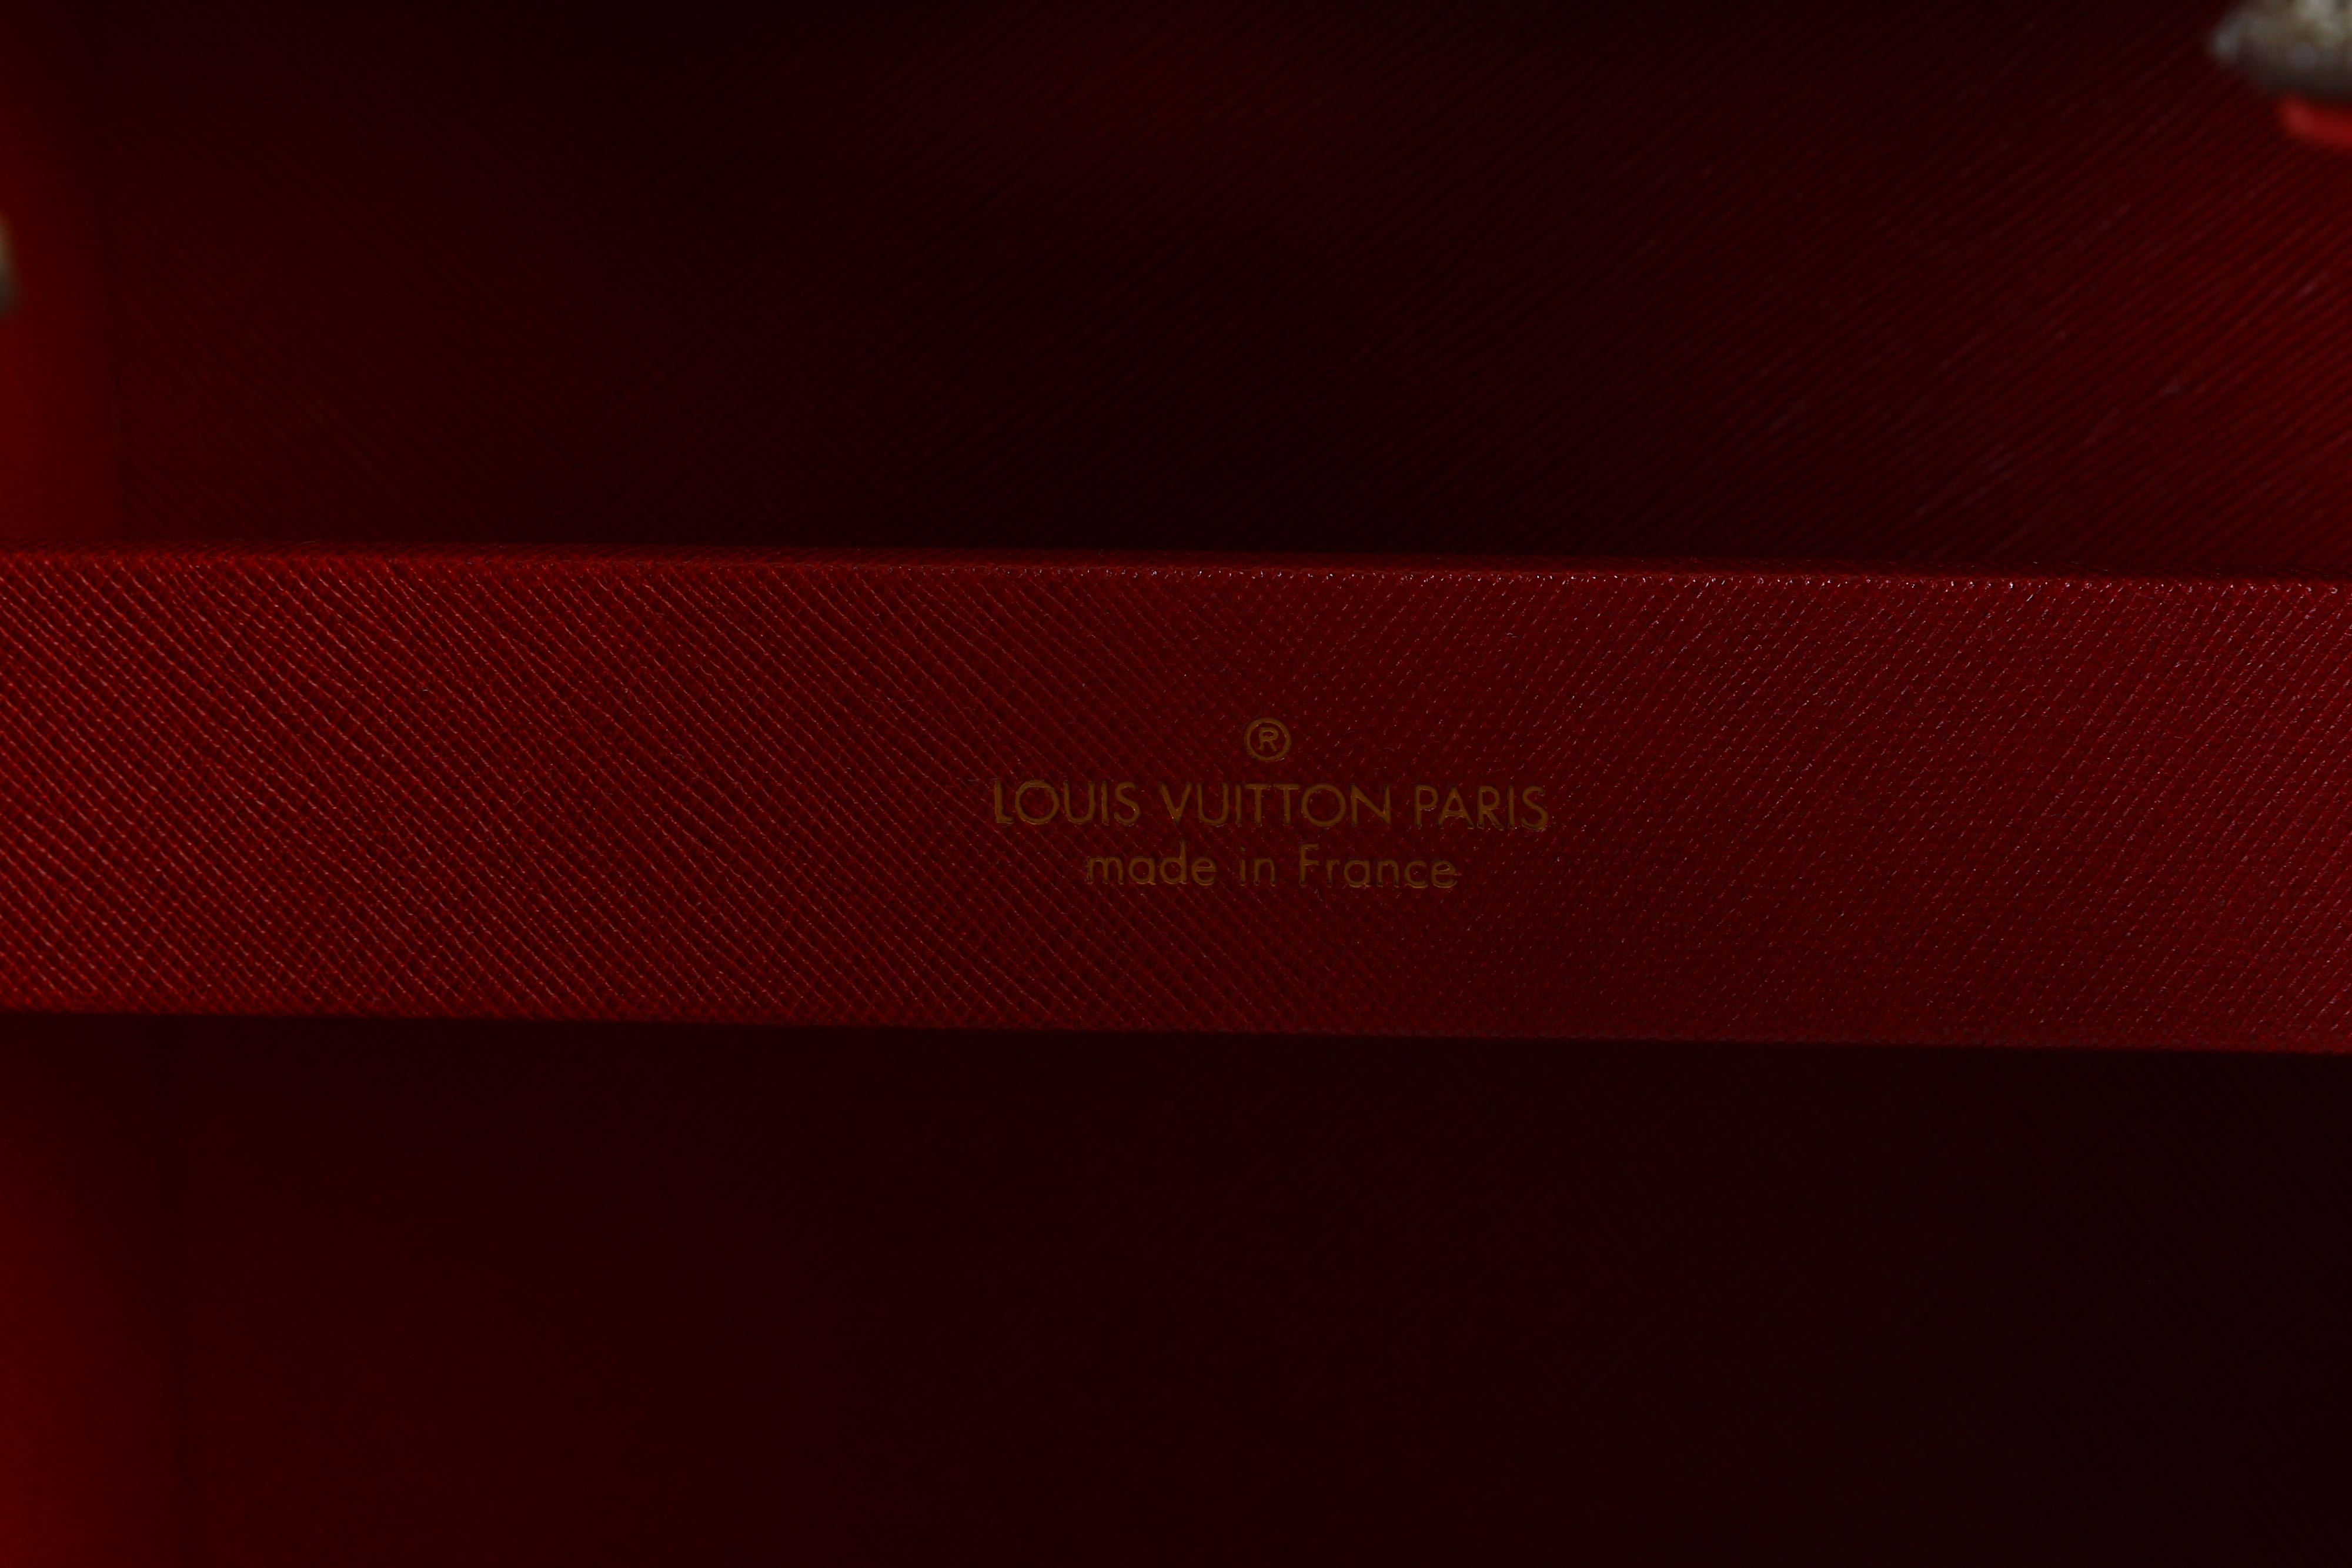 Lot 111 - Louis Vuitton and Sharon Stone for Amfar